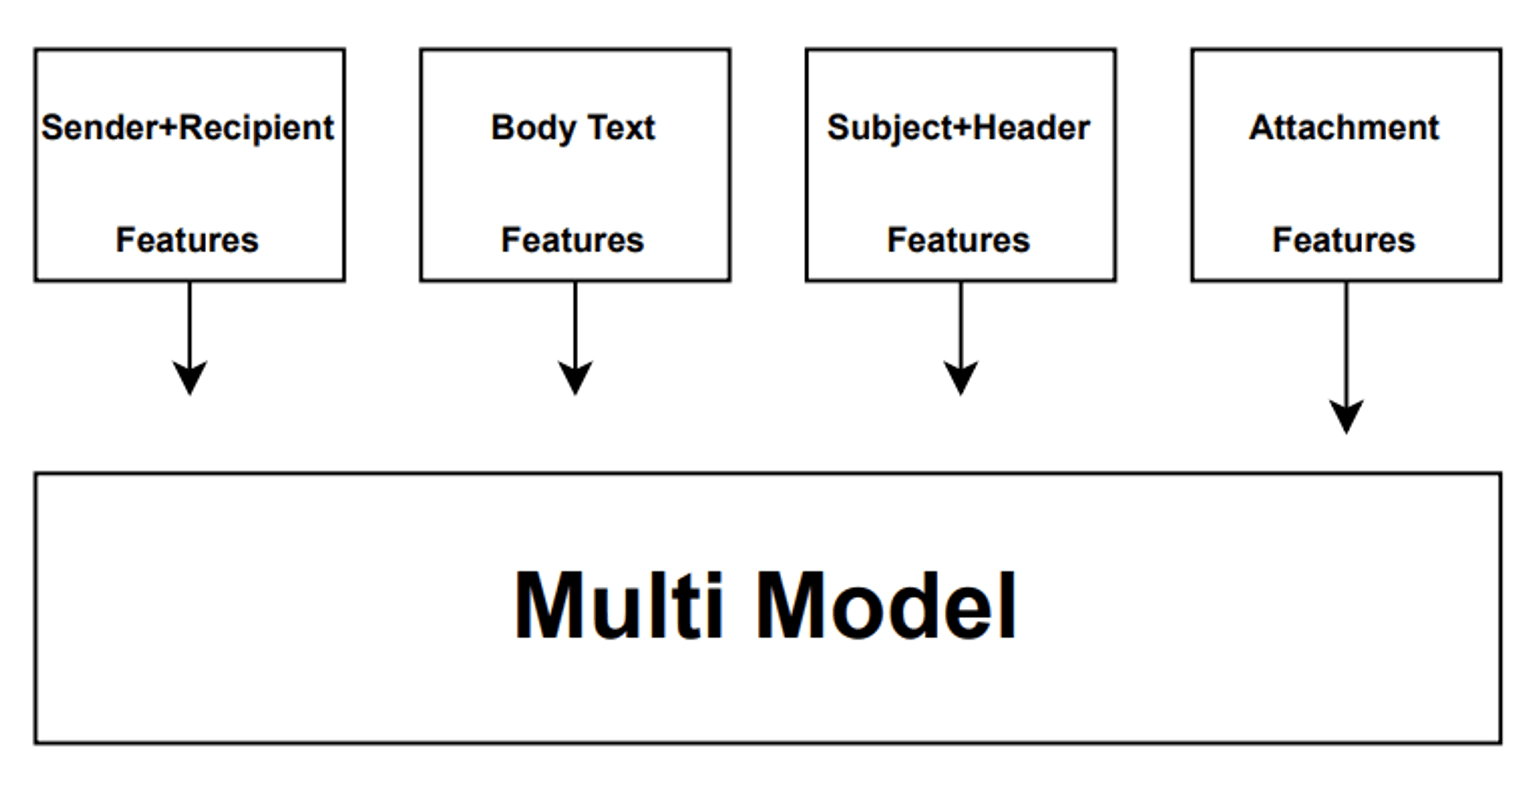 Attack Multi Model understands suspicious attachments: attachment features are most important